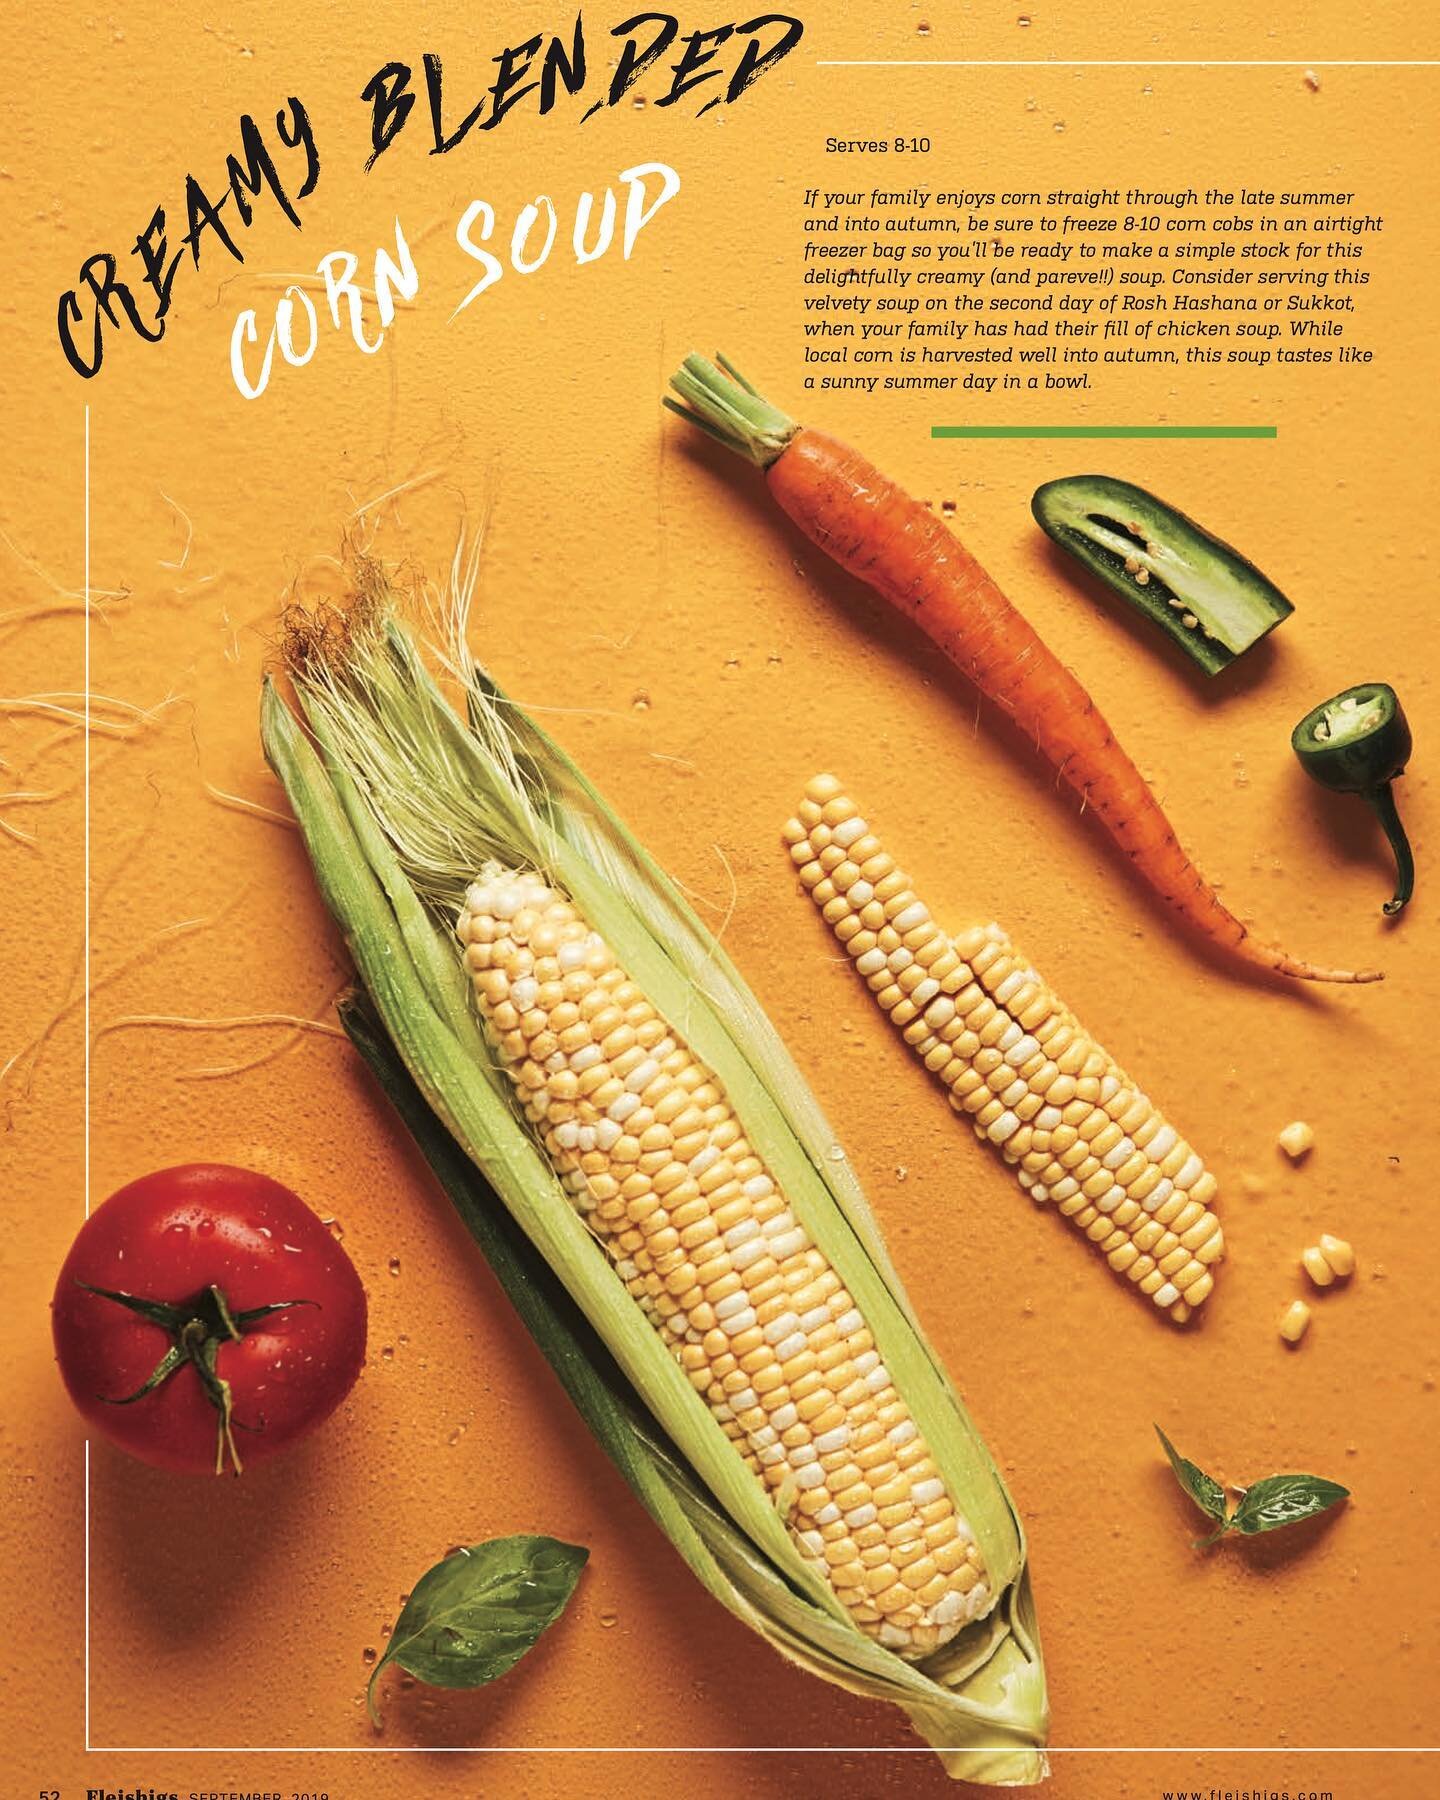 Creamy blended corn soup 🌽🥣
-
-
Shot for @fleishigsmag Issue 010 
Editor in Chief/Stylist: @shifraklein -
-
#fleishigs #fleishigsmag #food #foodie #foodphotography #foodmagazine #tearsheet #cornsoup #fresh #ingredients